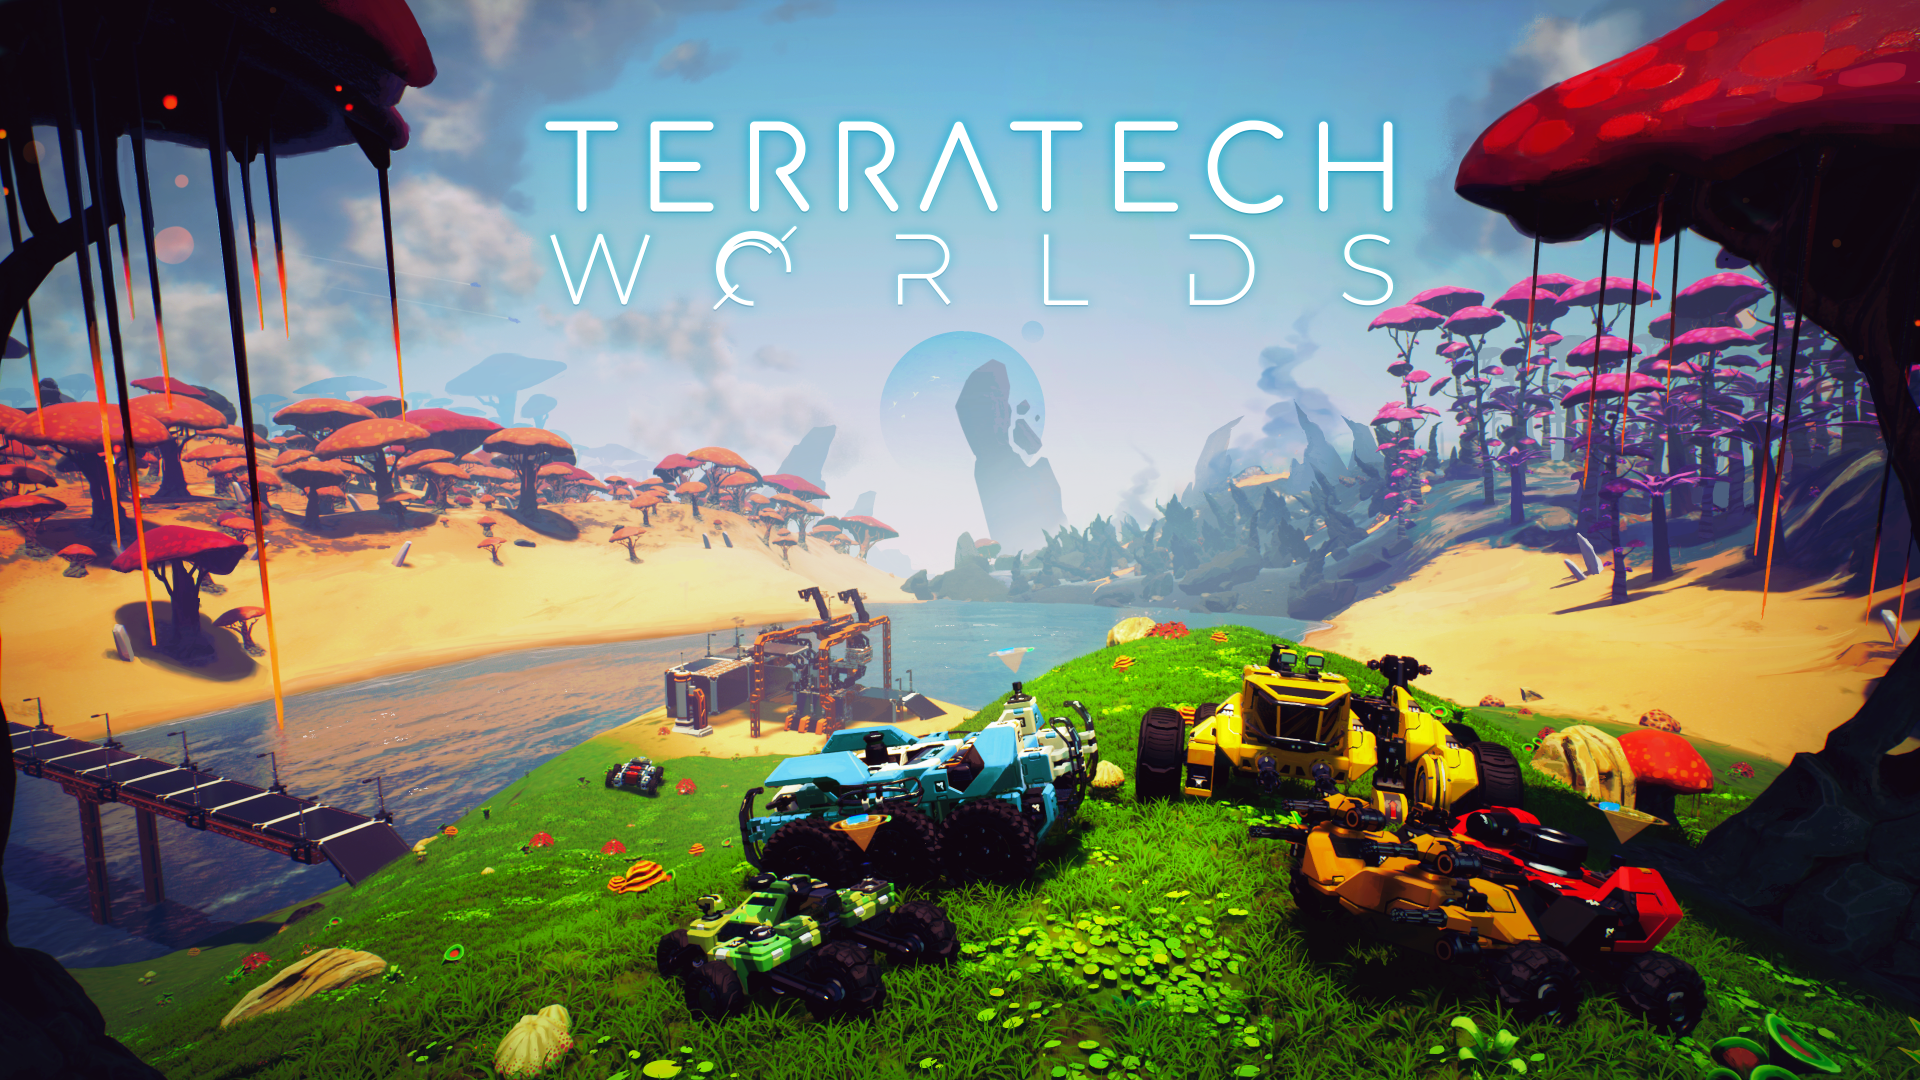 TerraTechWorlds earlyaccesspreview thumb bg